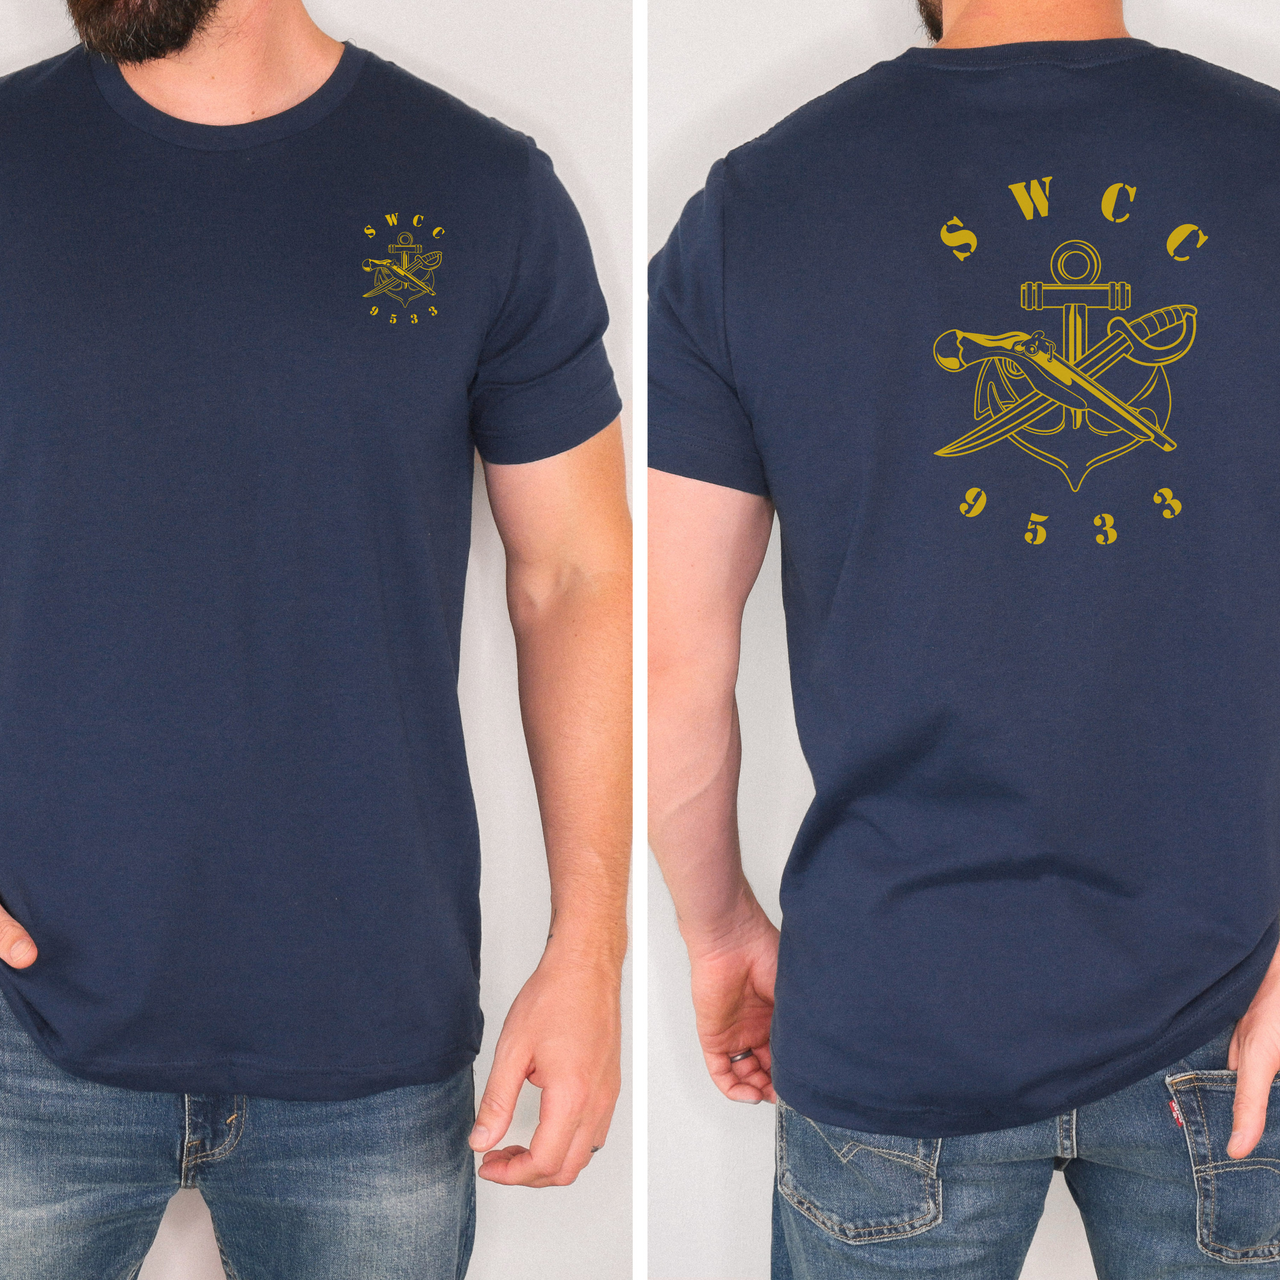 Special Warfare Combatant Craft Crewmen, 9533, T-Shirt (Gold)